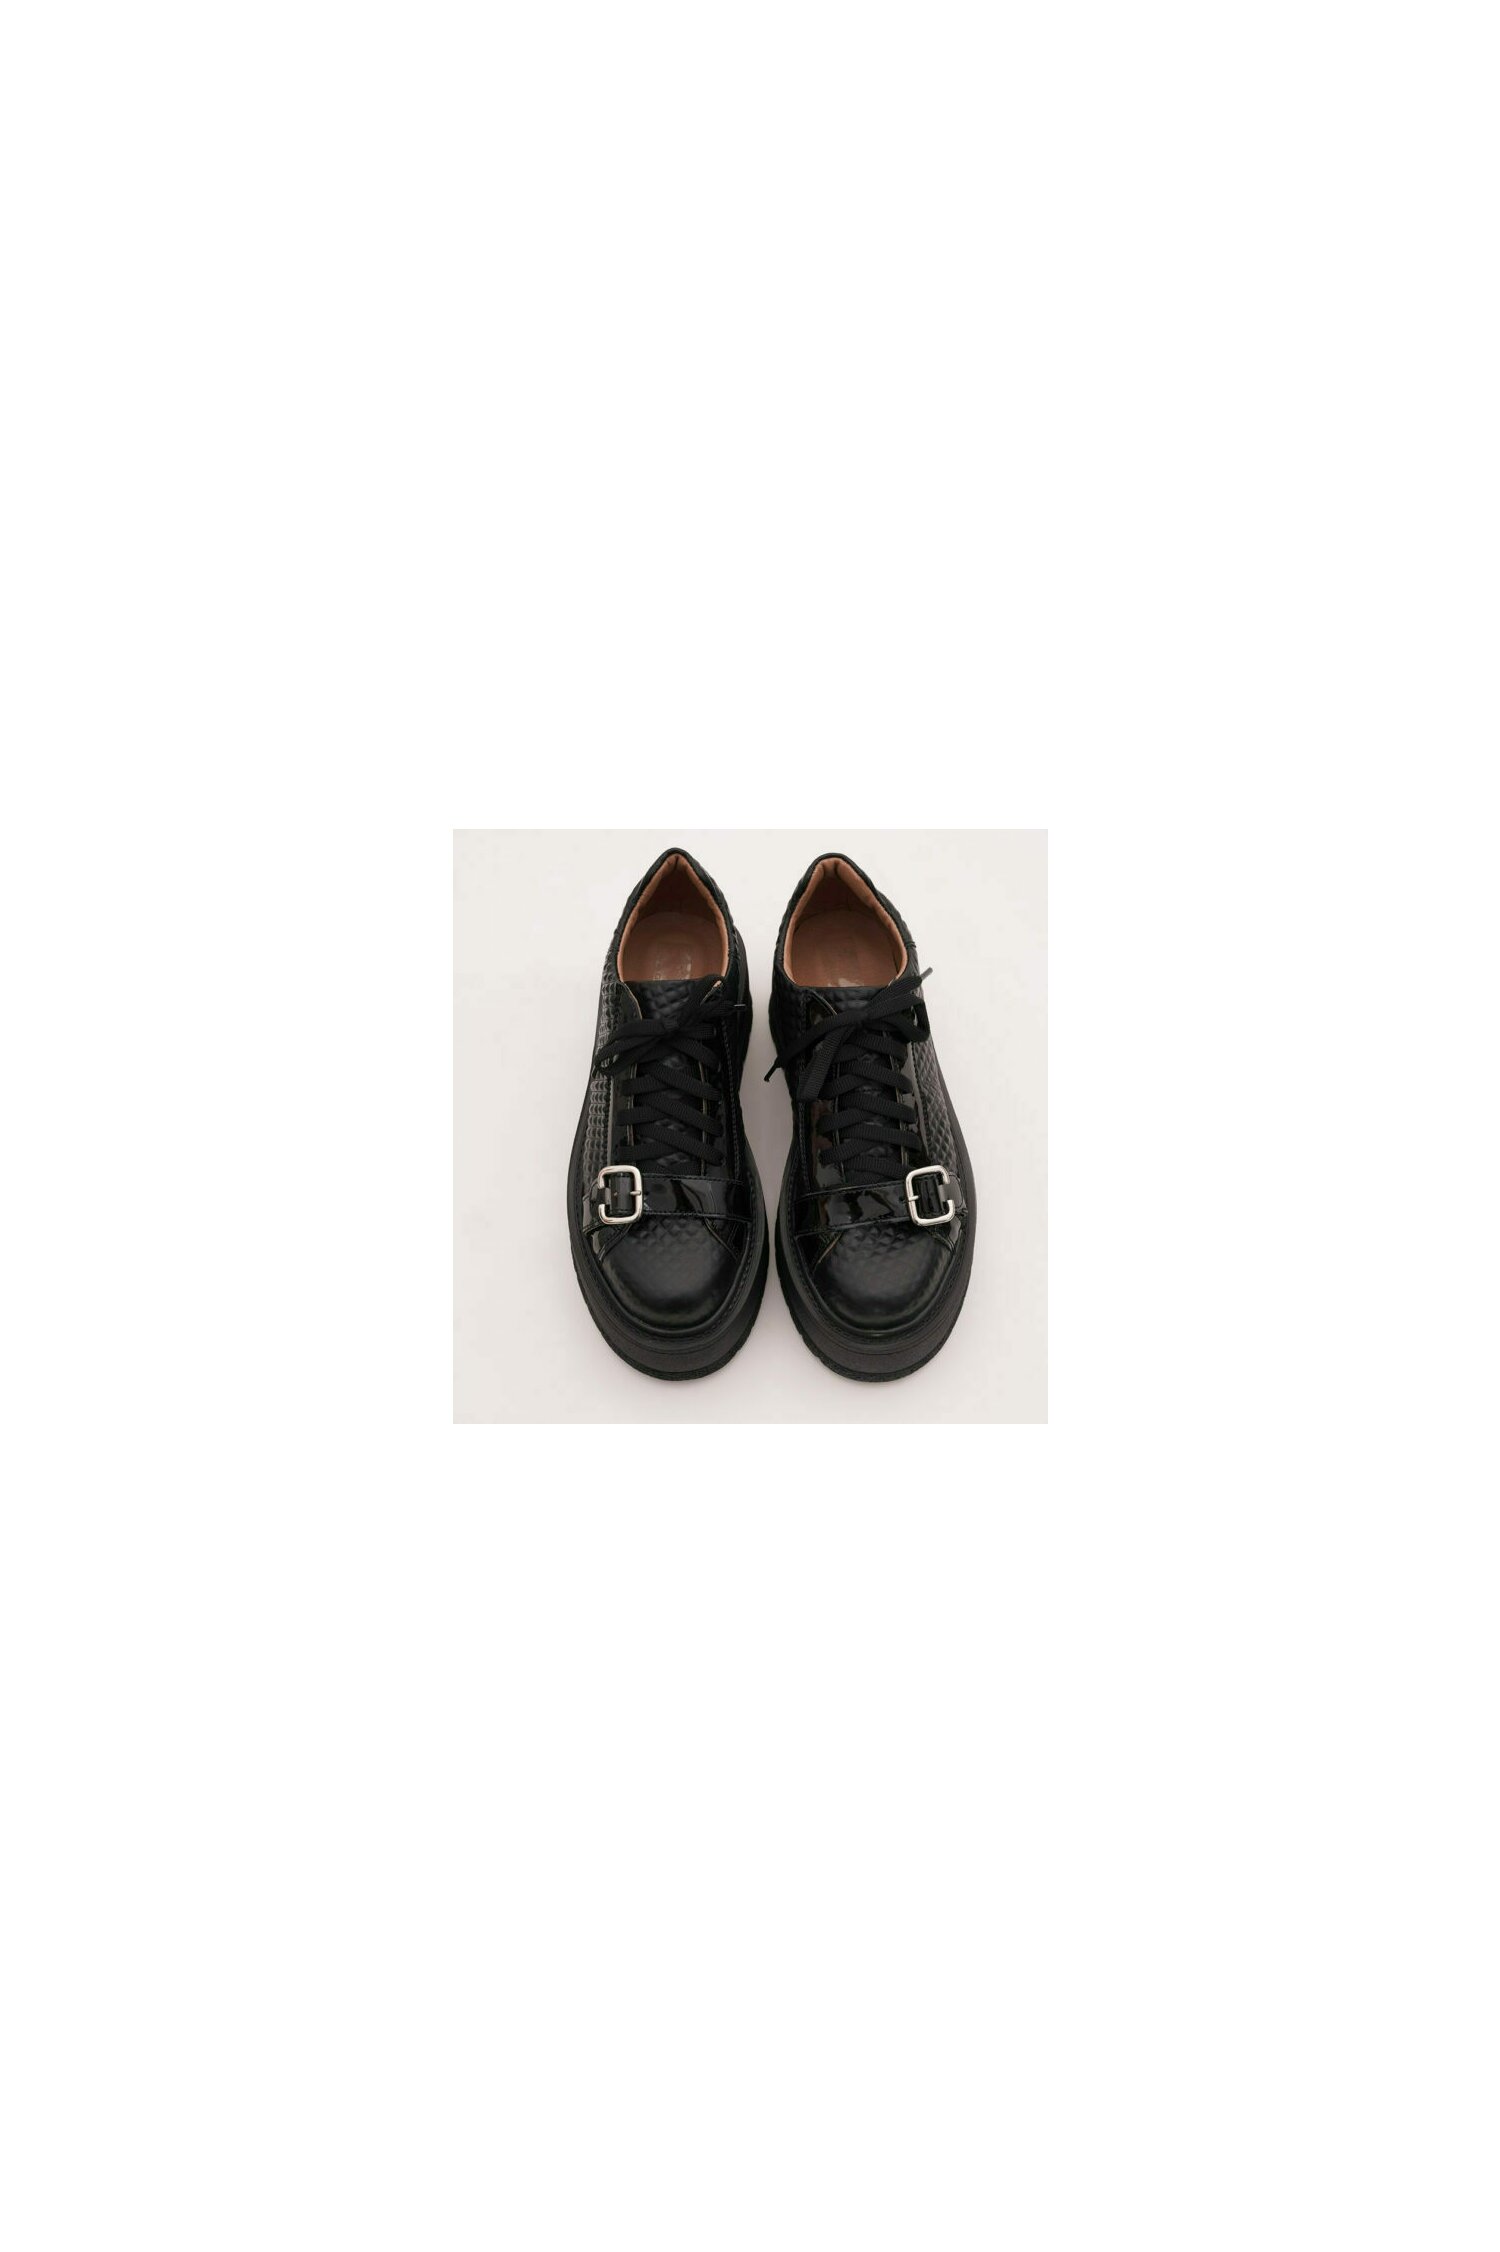 Pantofi Ema negri cu platforma si catarama la varf image5